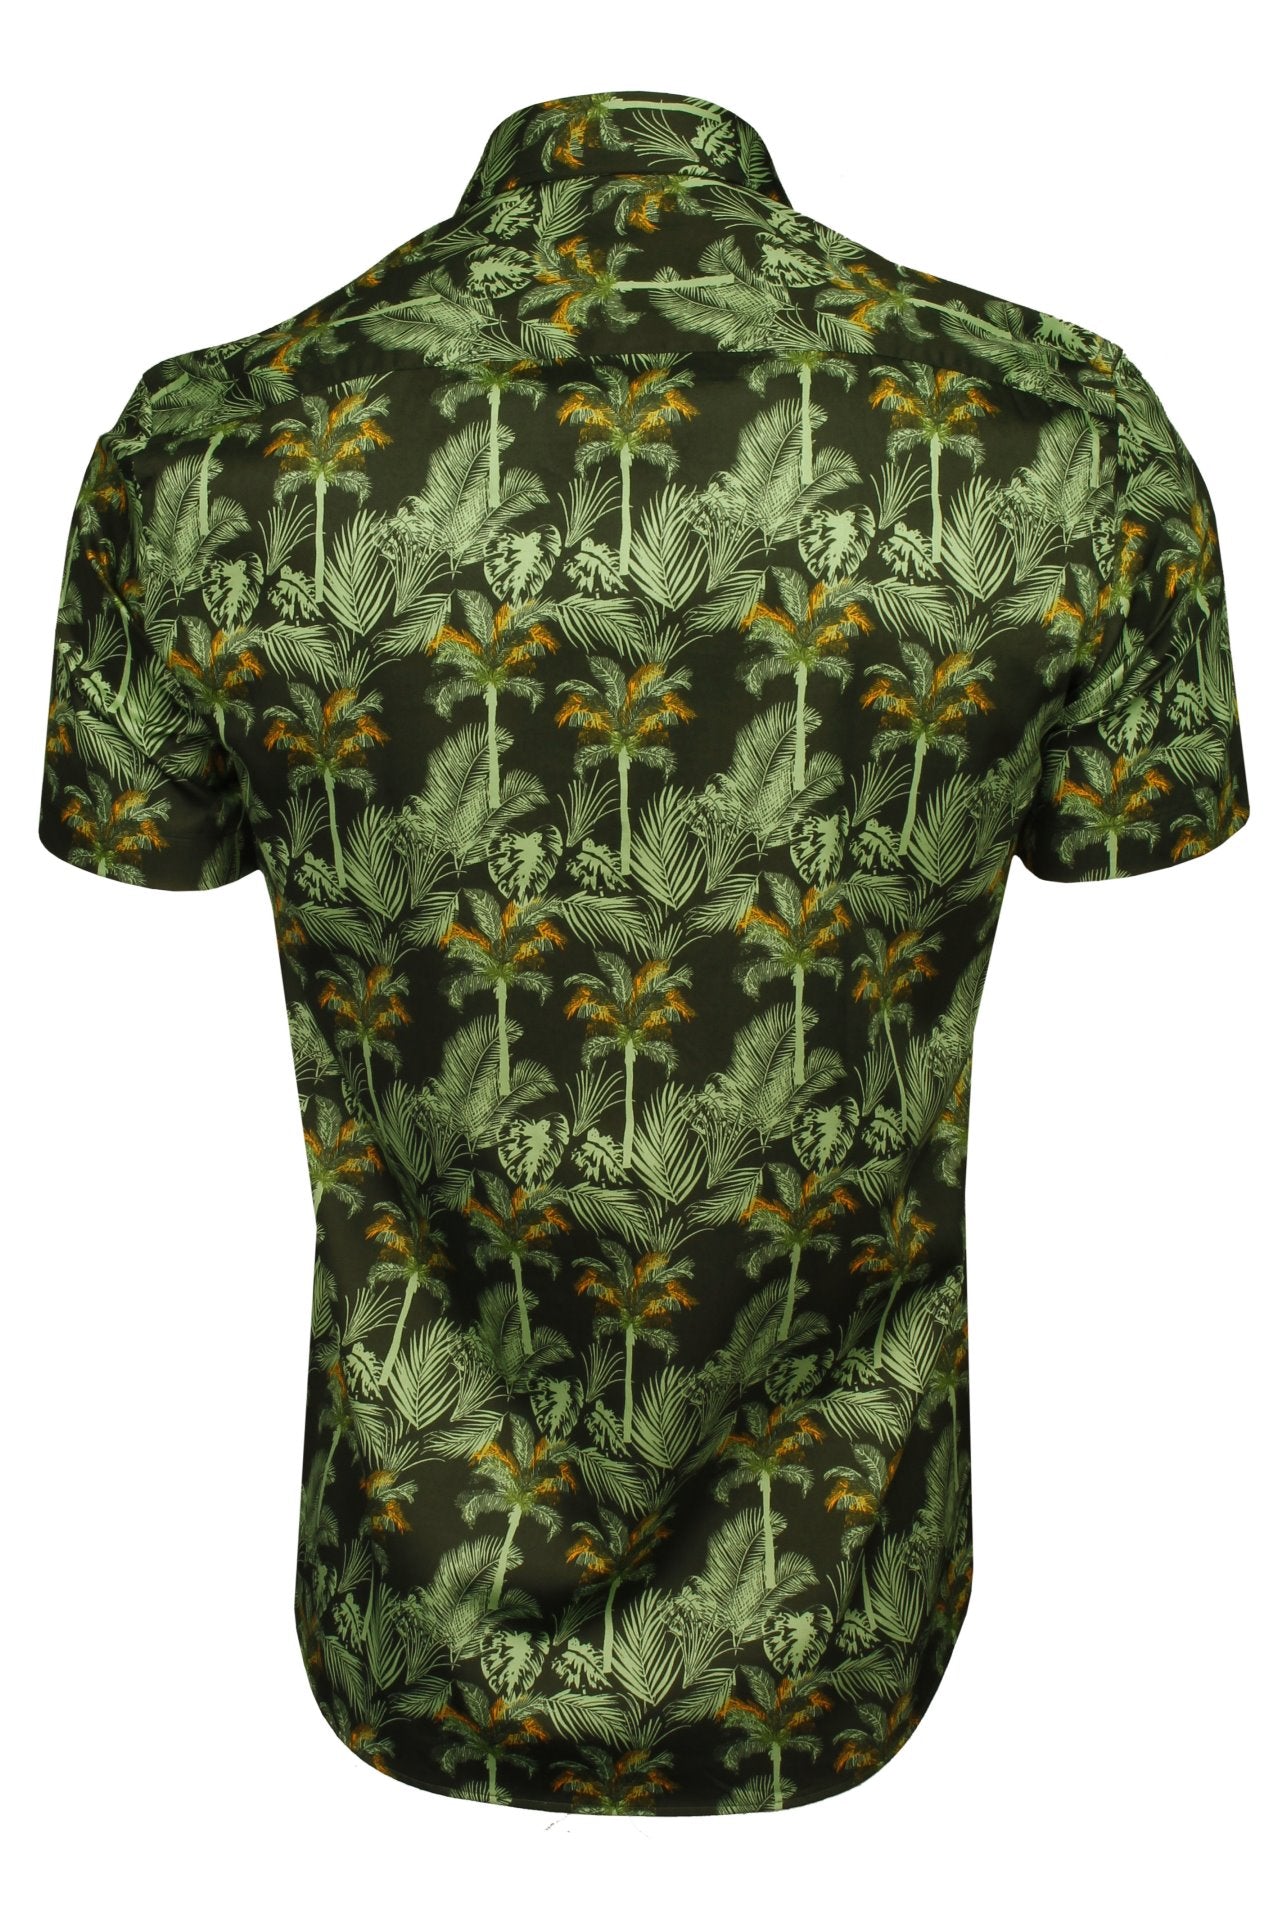 Xact Mens Cotton Palm Tree Hawaiian Shirt, Short Sleeved-3